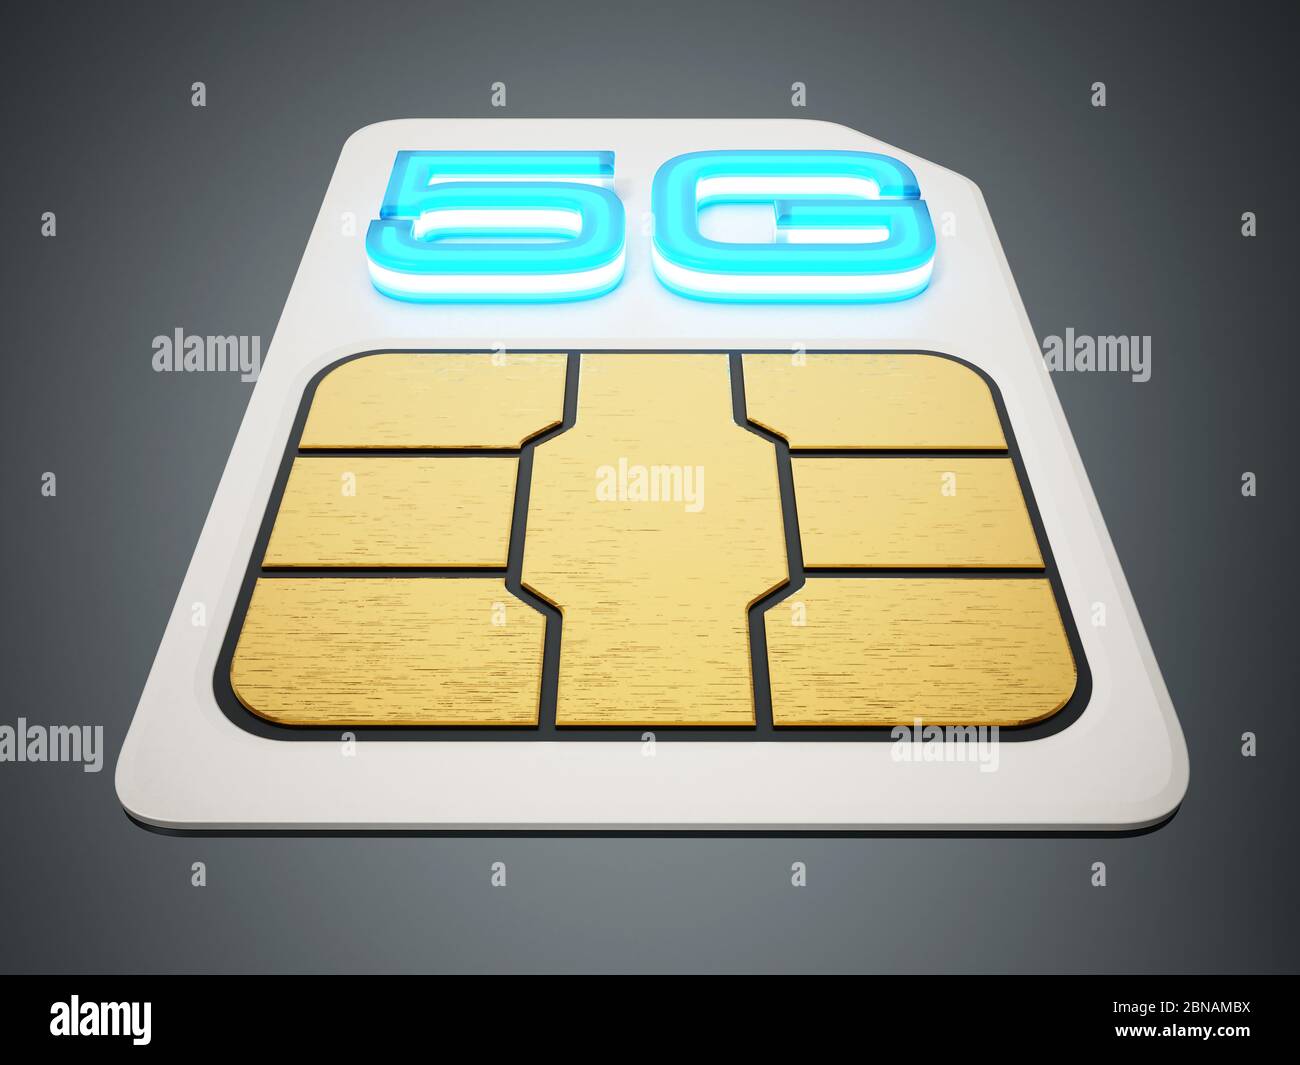 5g SIM card on gray background. 3D illustration. Stock Photo